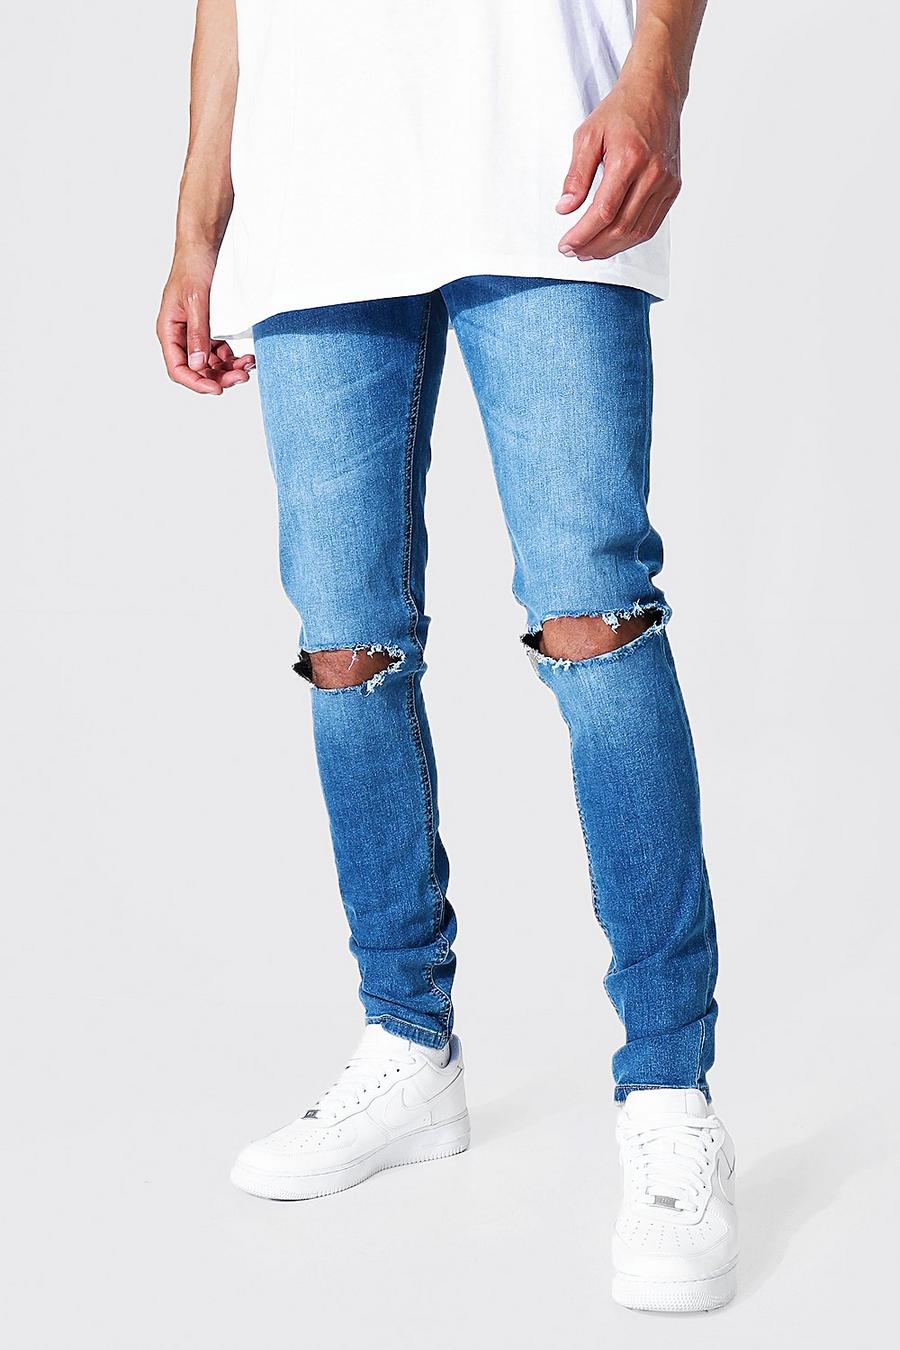 Jeans Tall Skinny Fit elasticizzati con spacchi sul ginocchio, Antique blue image number 1